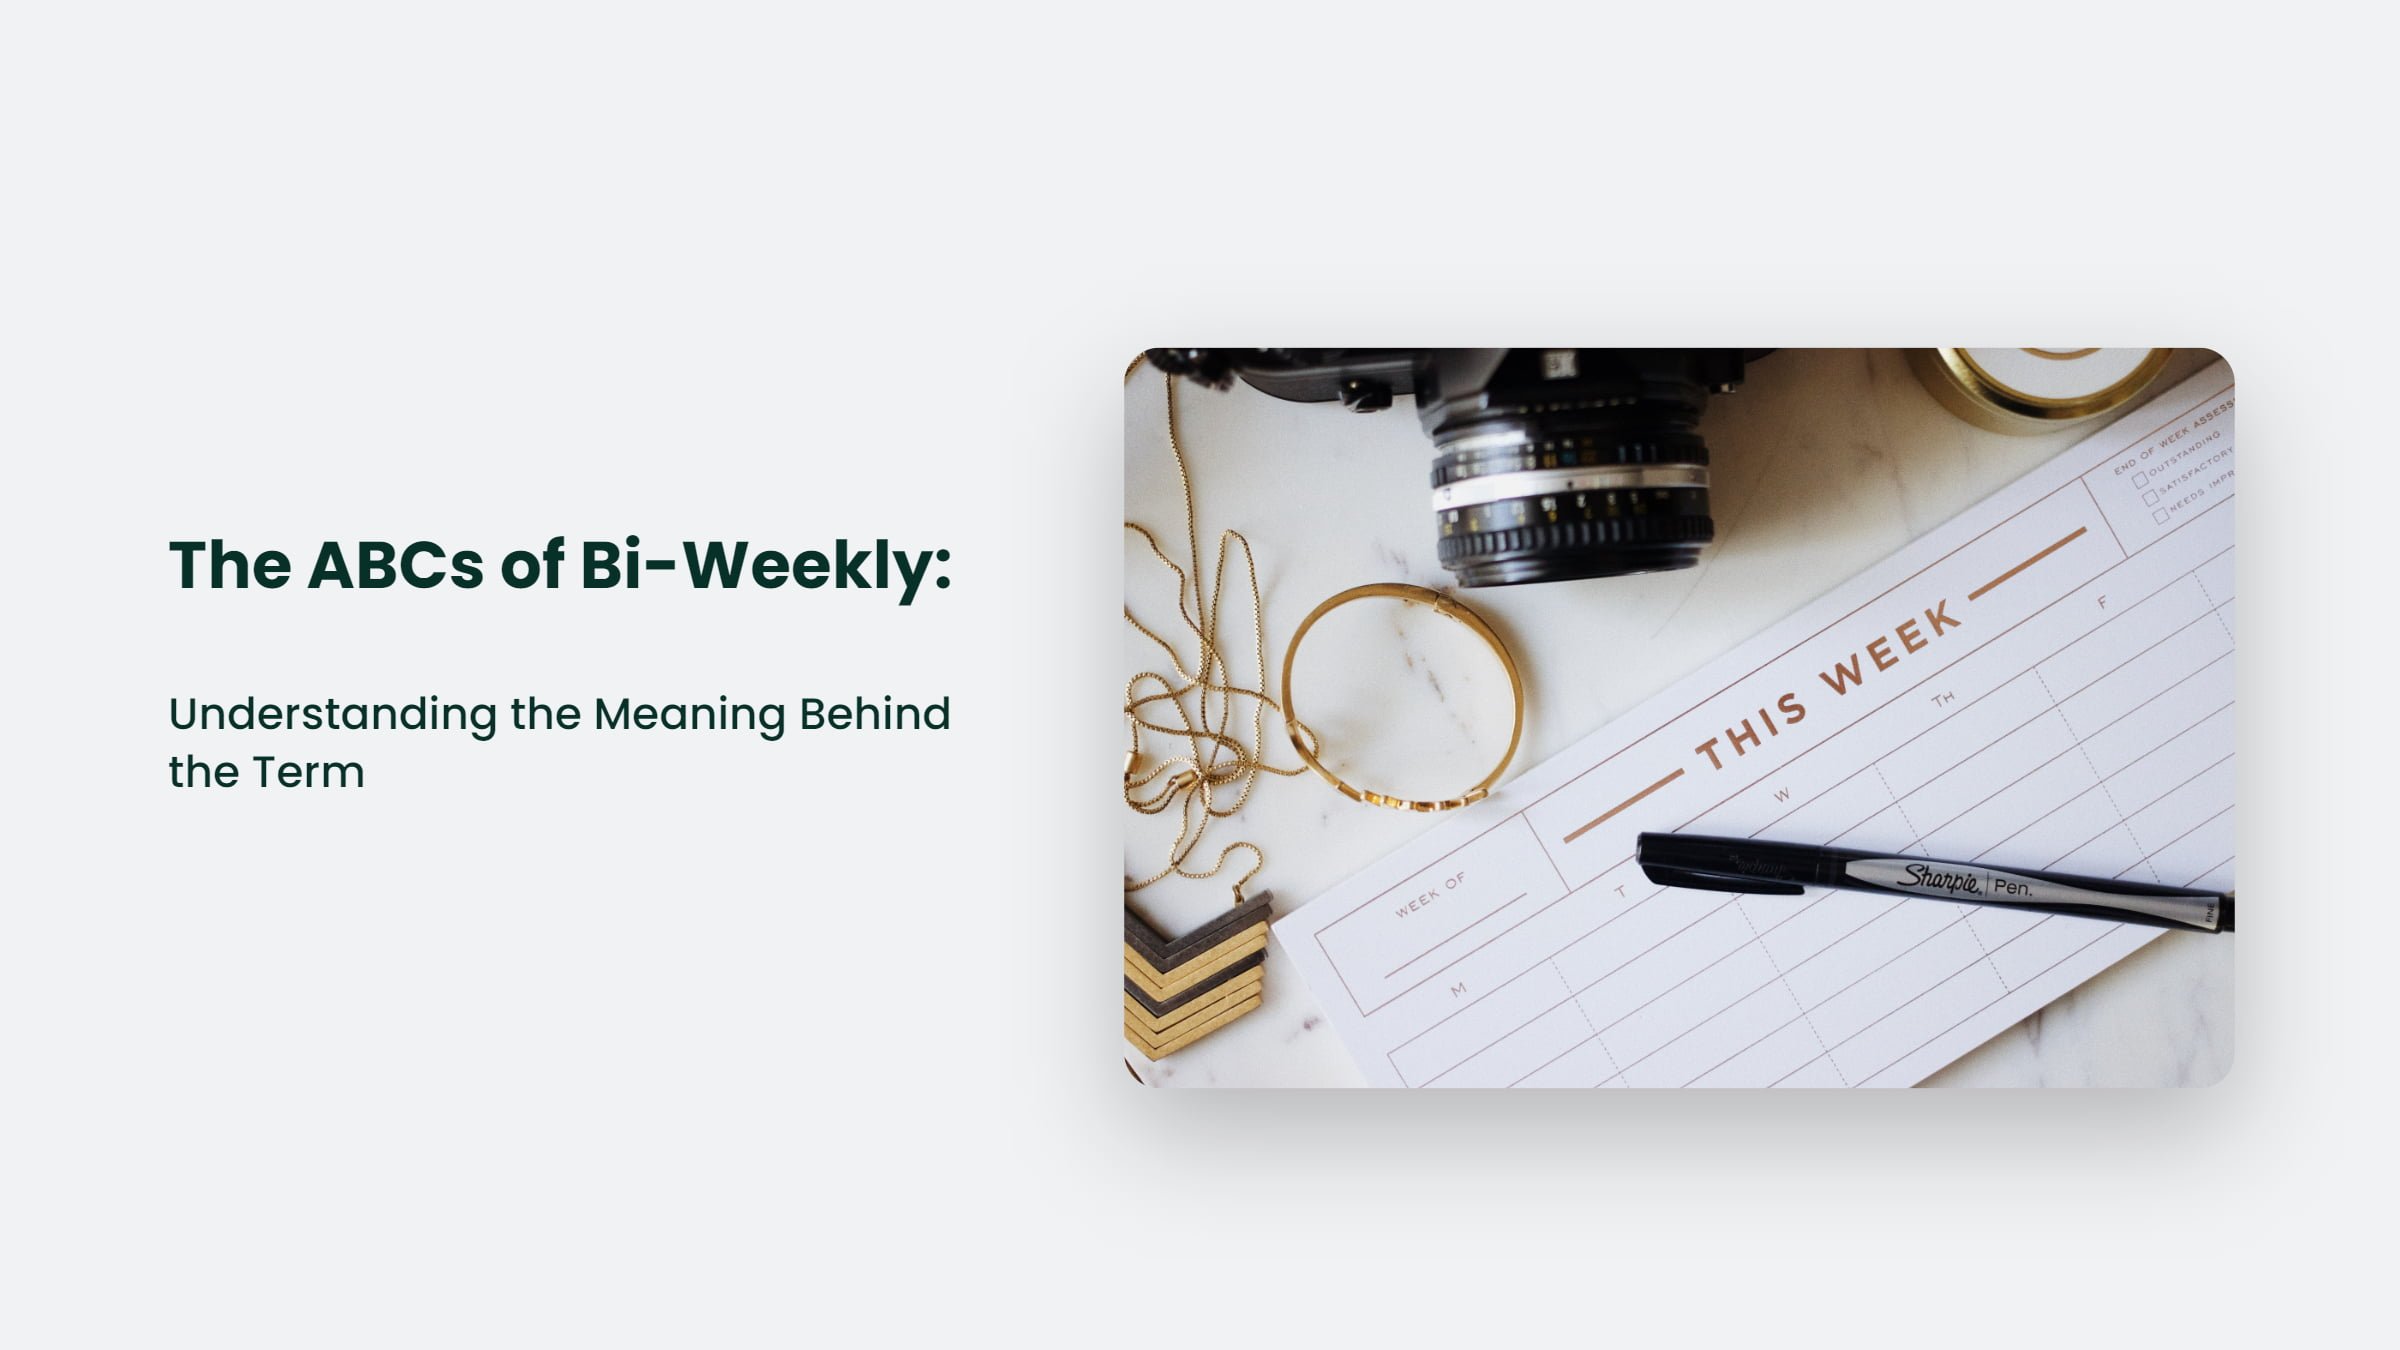 What Does Bi-Weekly Mean?